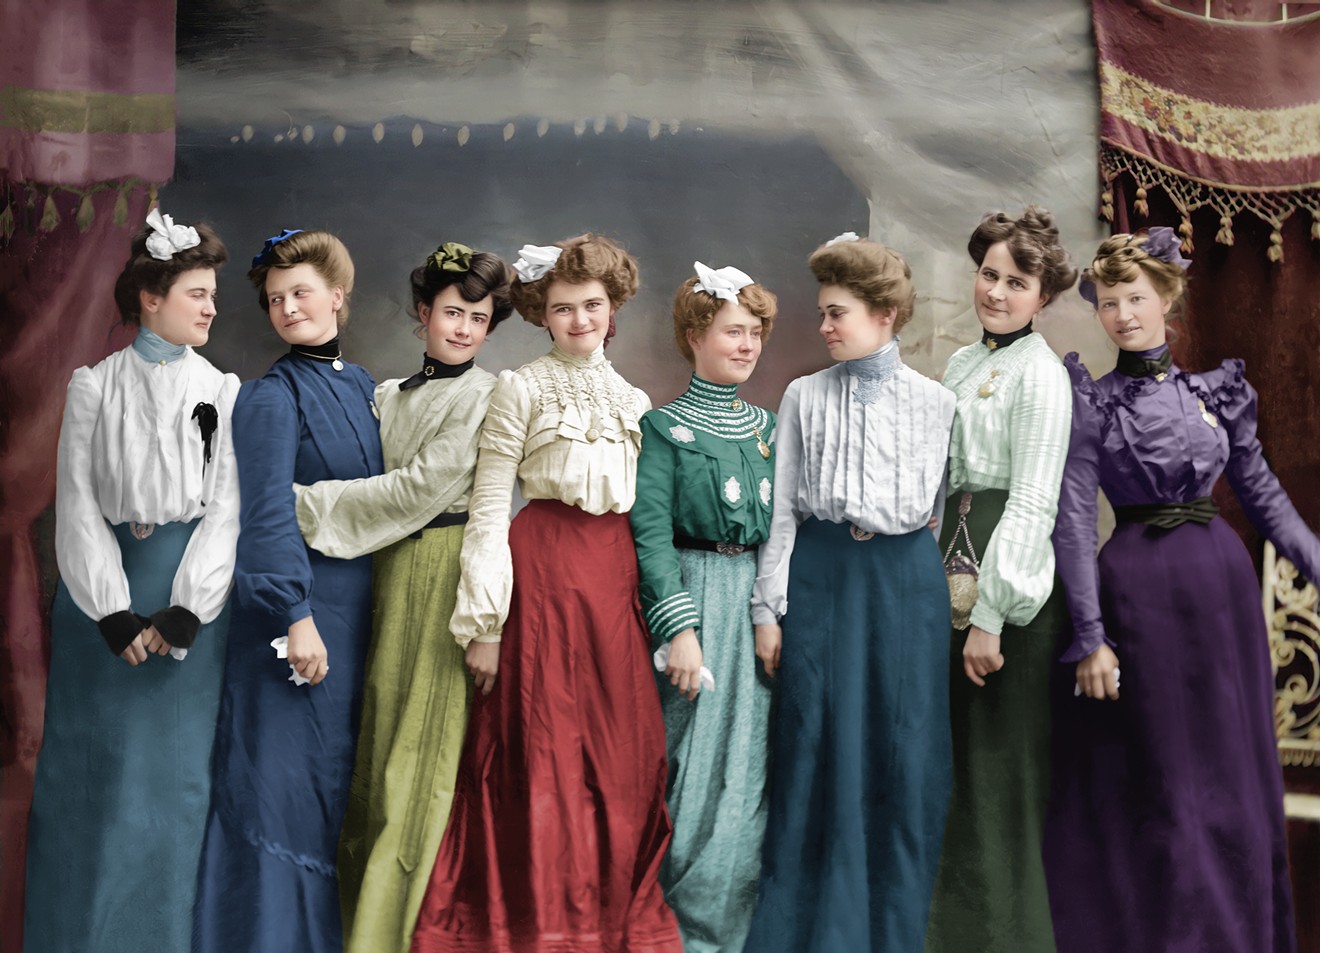 A colorized image of women taken by South Dakota photographer John Johnson in the 1890's-1900's